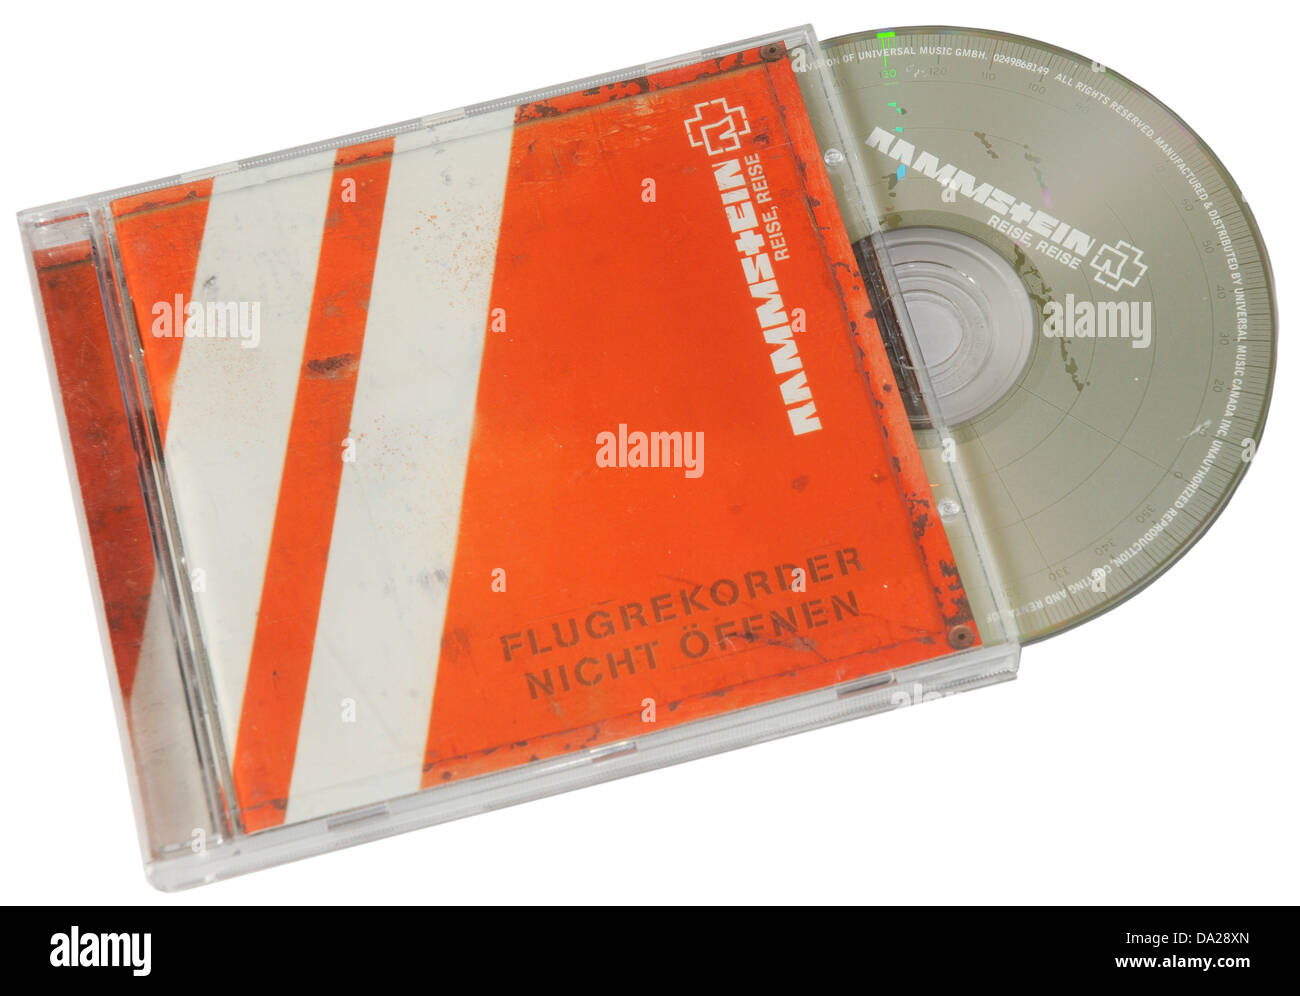 Rammstein Reise Reise album su CD Foto Stock